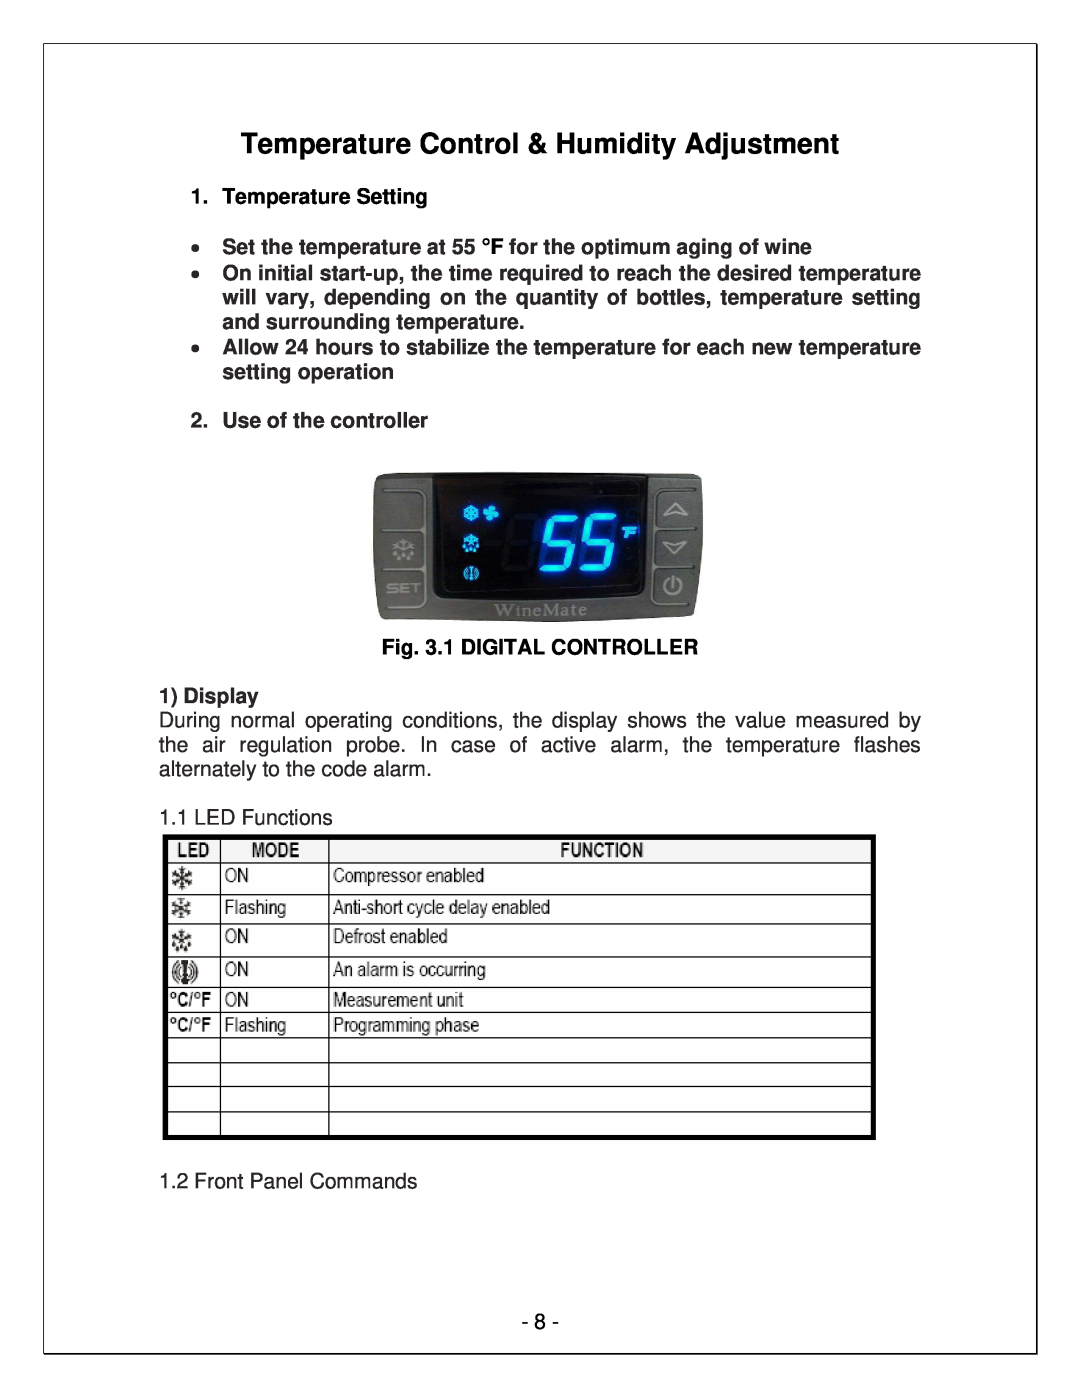 Vinotemp VINO1500CD, VINO-4500SSR Temperature Control & Humidity Adjustment, Temperature Setting, 1 DIGITAL CONTROLLER 